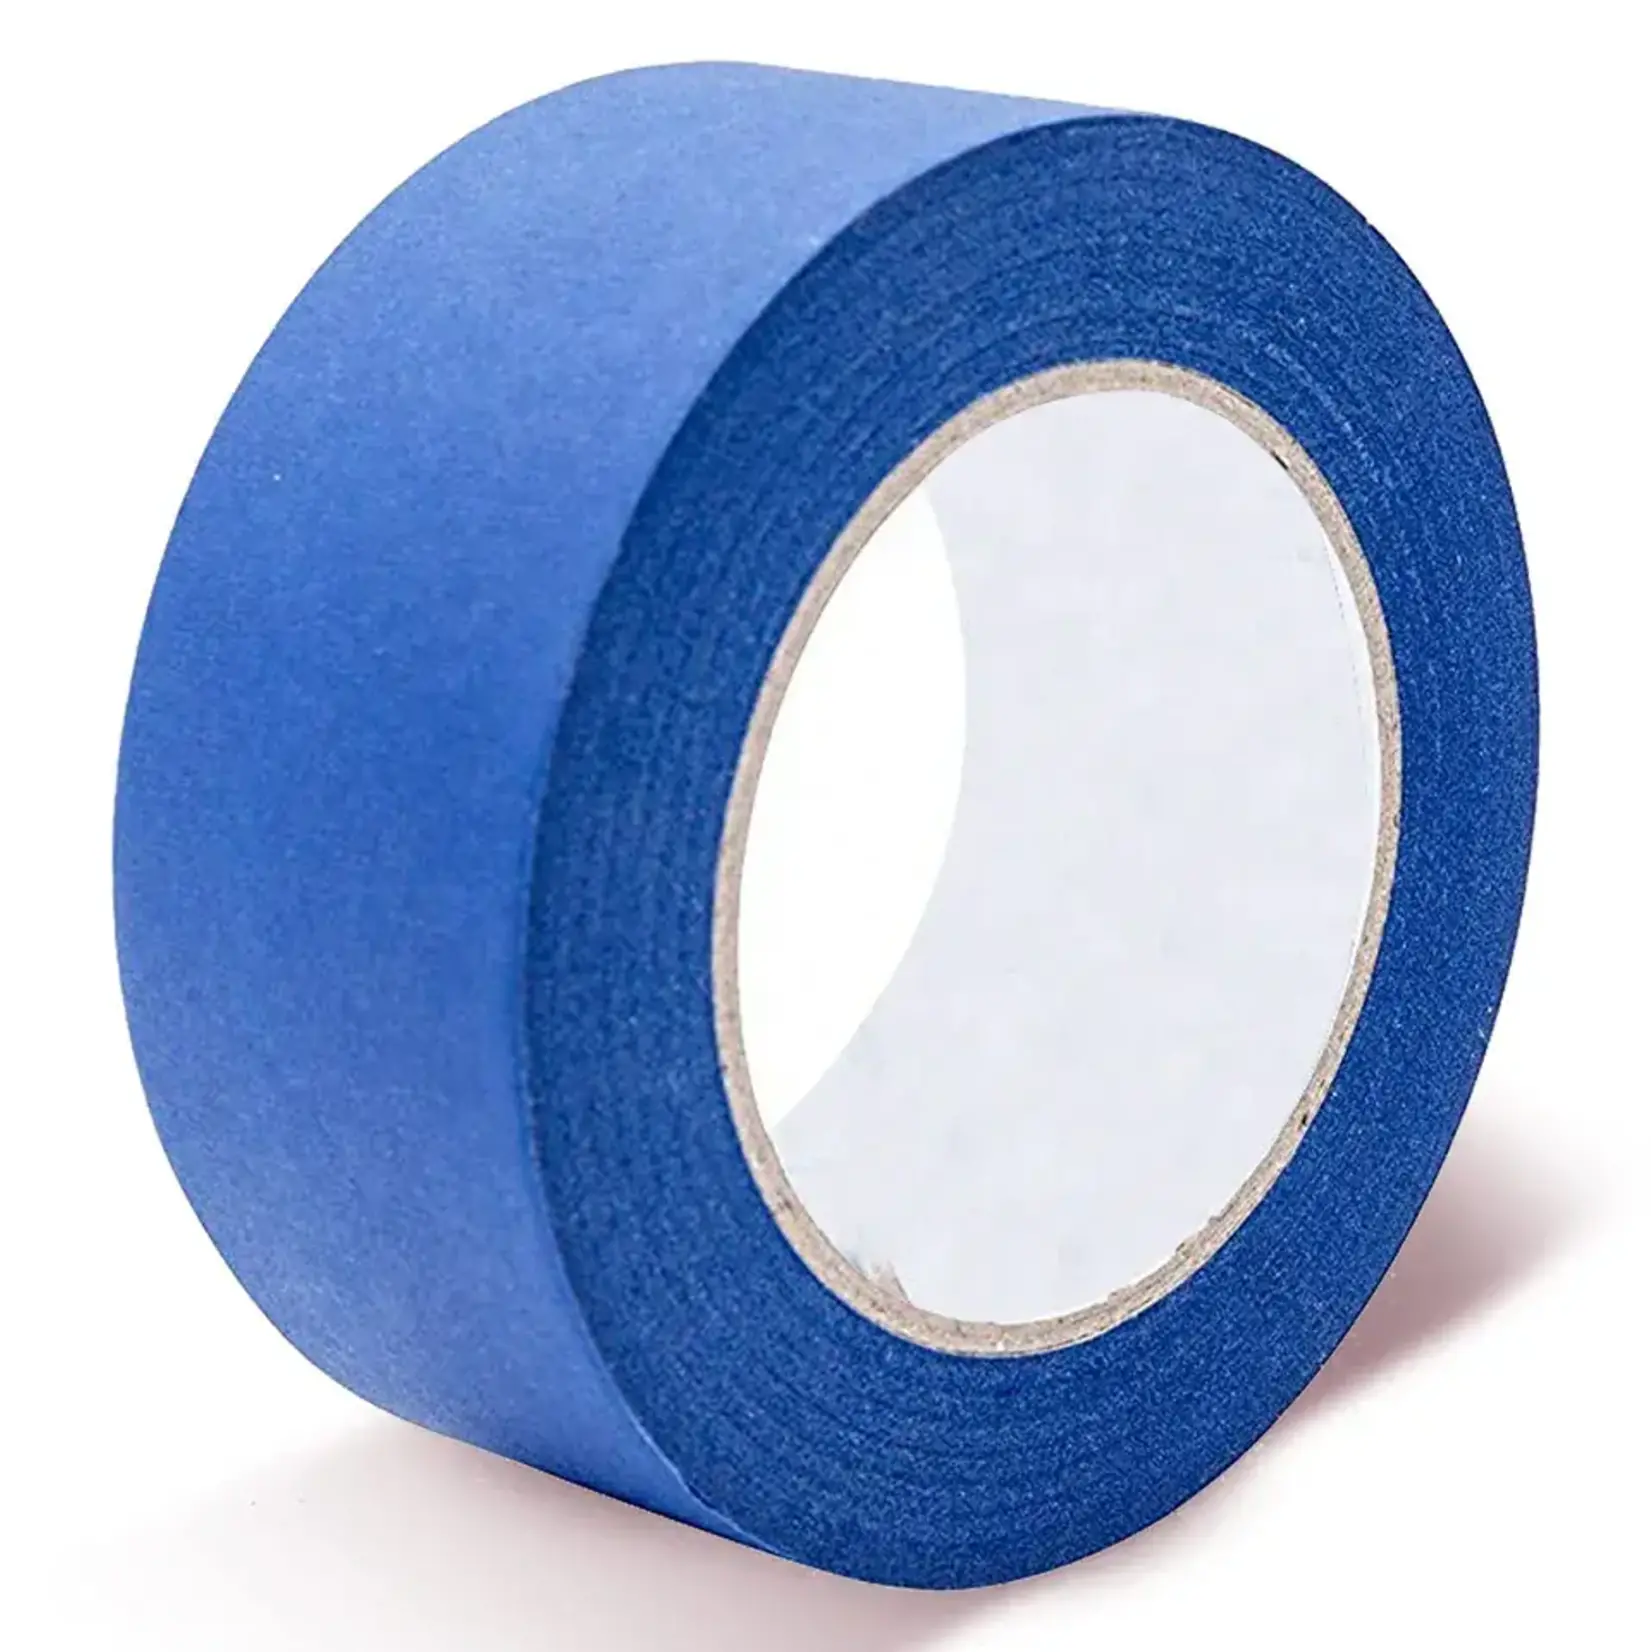 Dry It Center Dry It Center - 2" Blue Masking Tape (48MM x 55M) Case of 54 Rolls